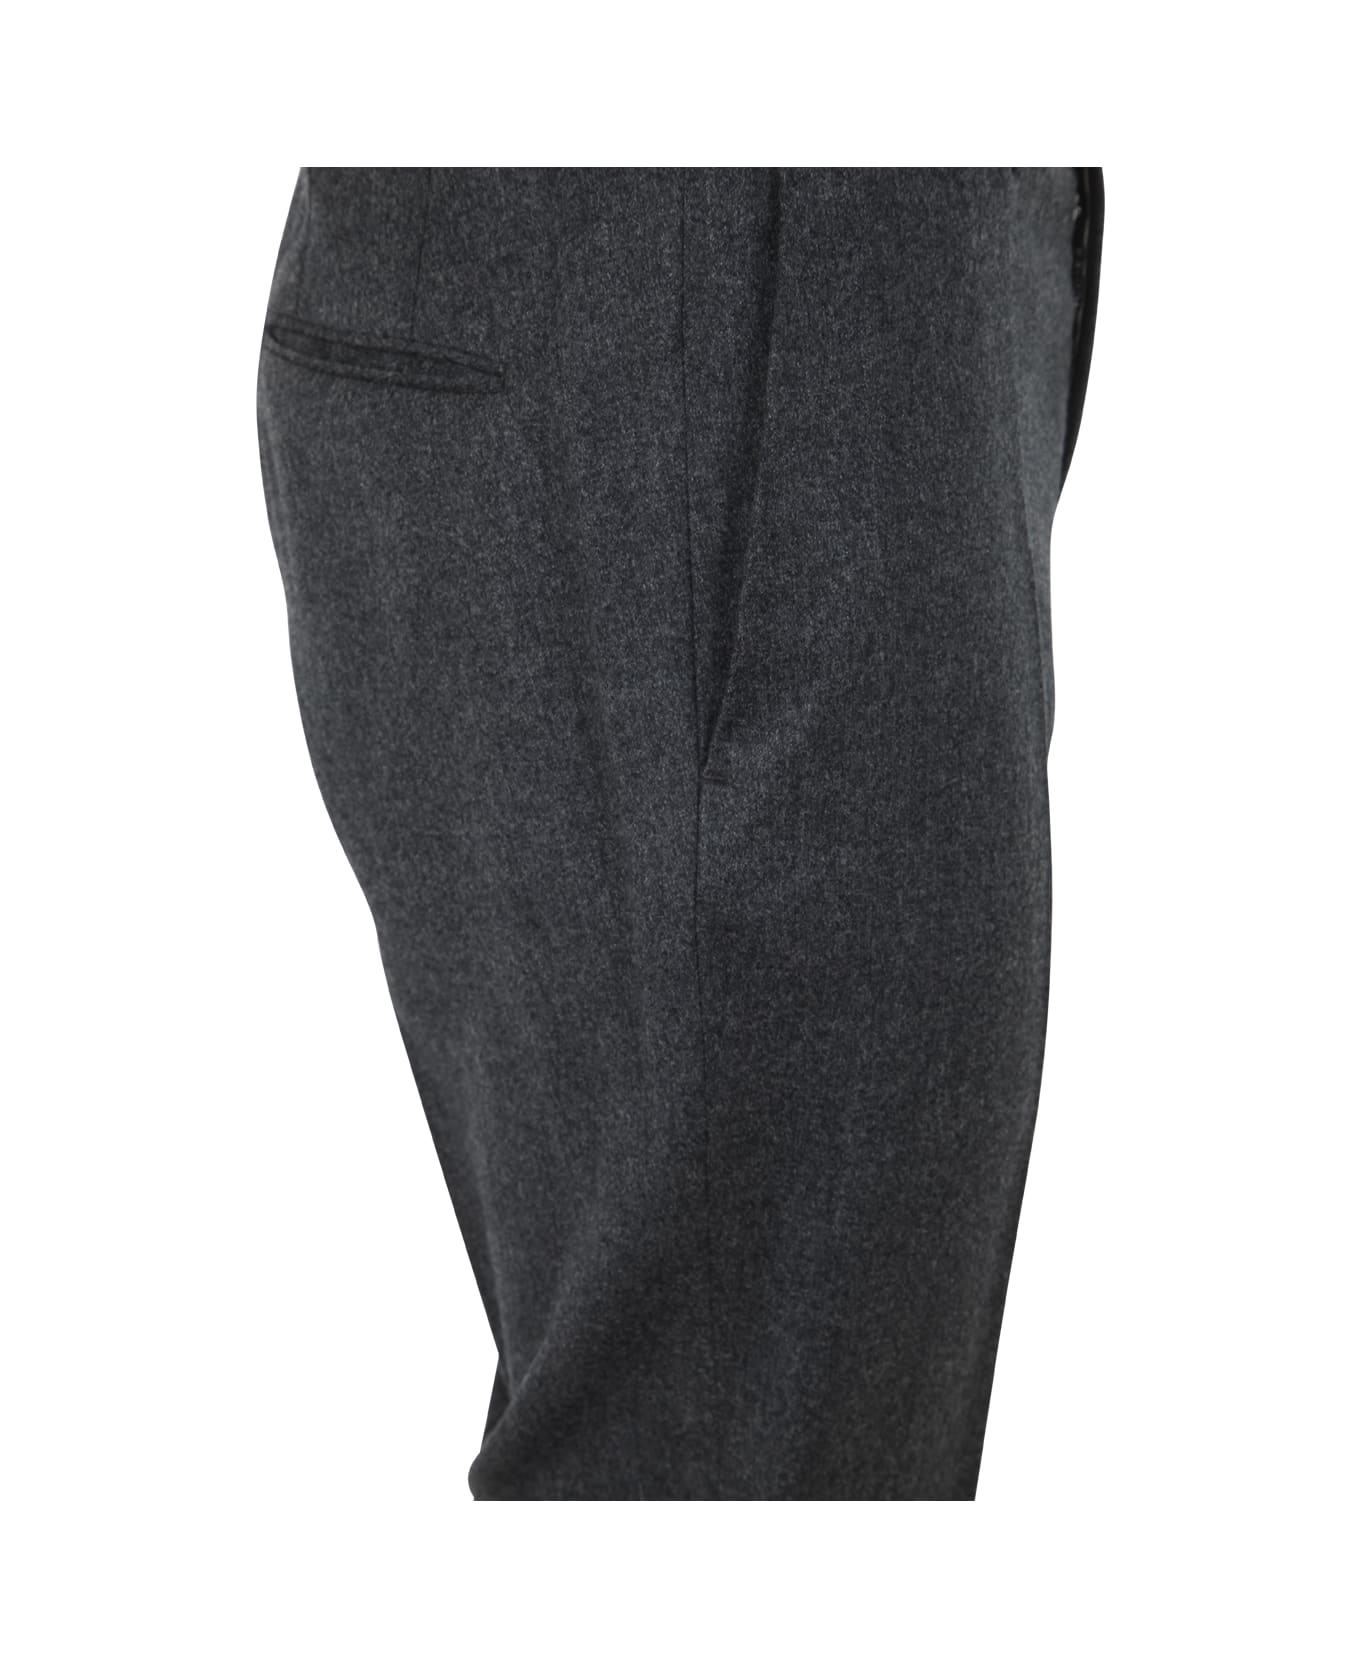 Incotex Smart Flannel Trousers - Medium Grey